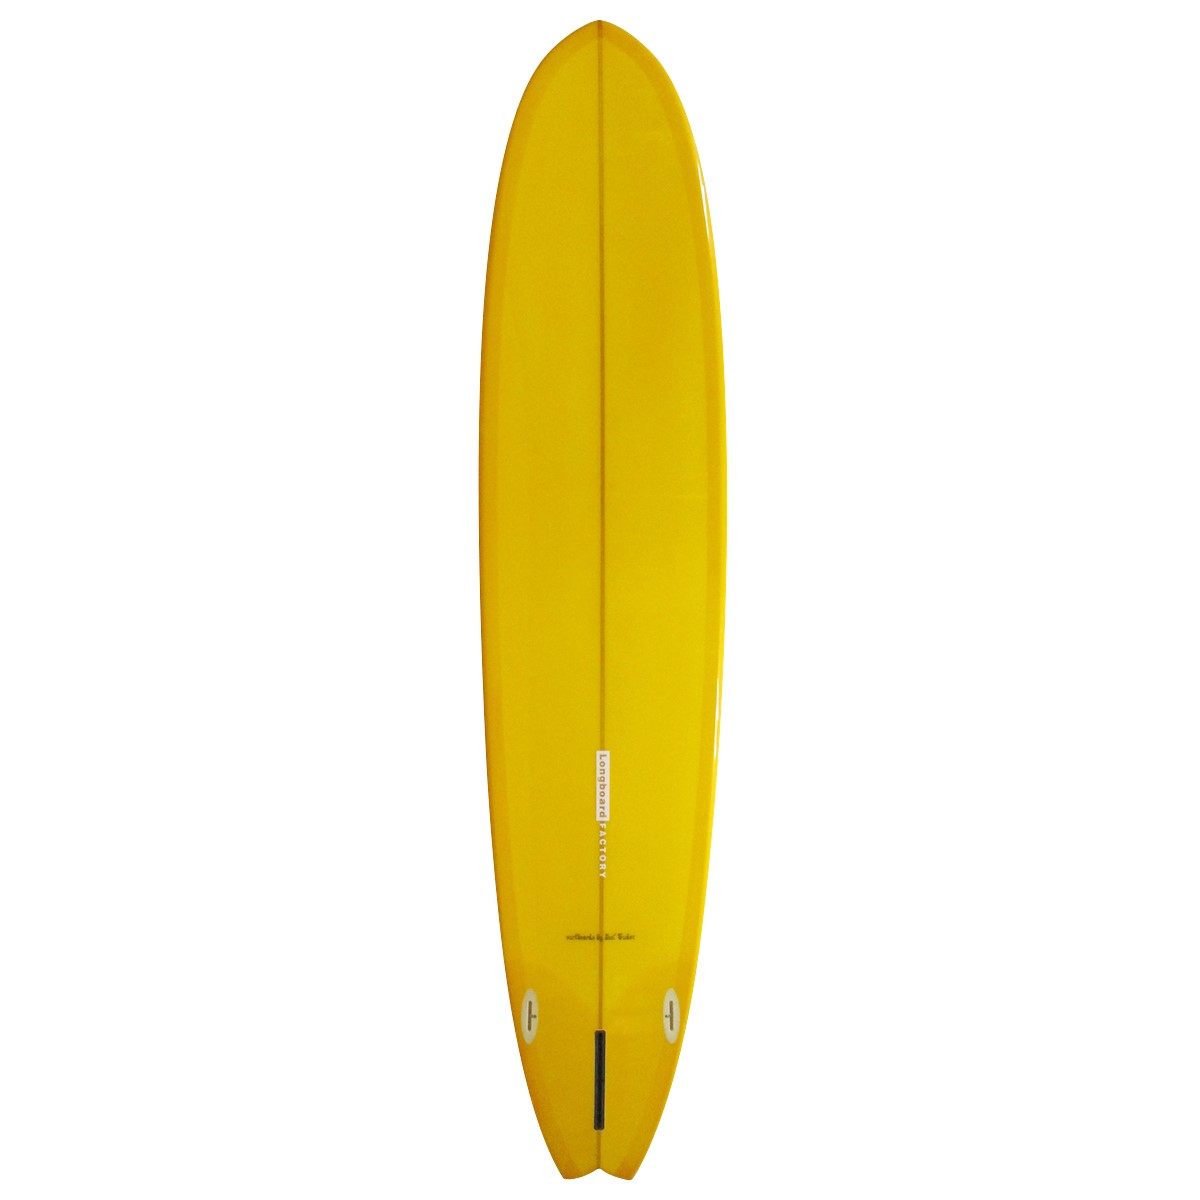 SURFBOARDS BY JOEL TUDOR / SWALLOW TAIL 9`1 Shaped by BILL 